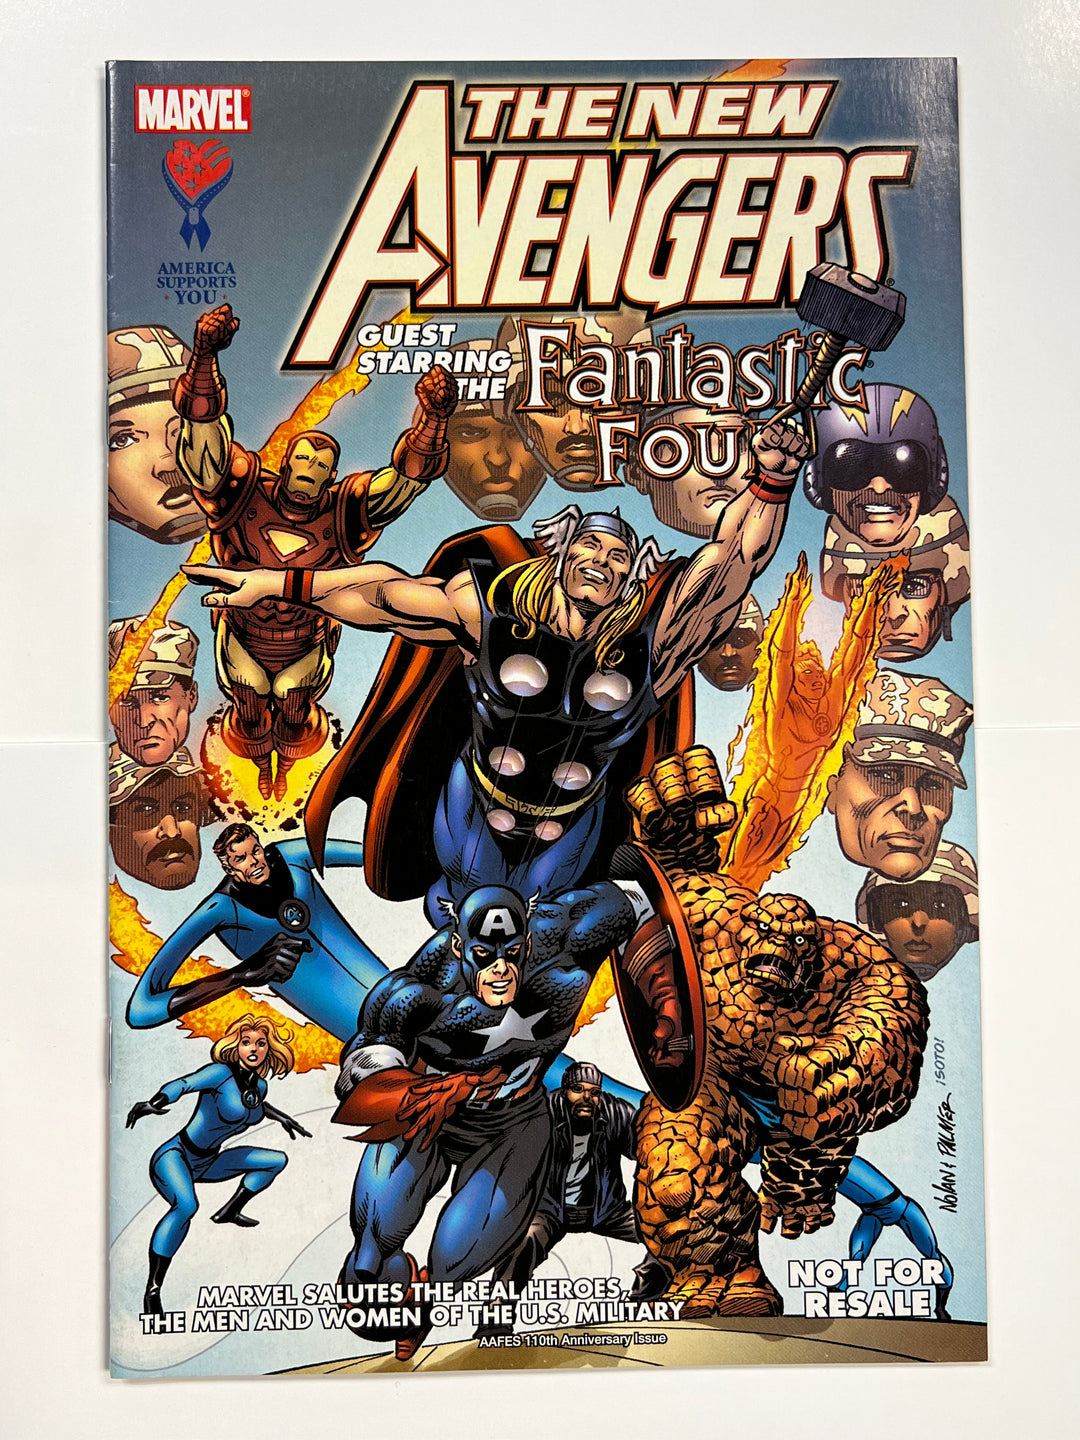 New Avengers: Pot of Gold (AAFES110 Anniversary Issue) Marvel 2005 VF-